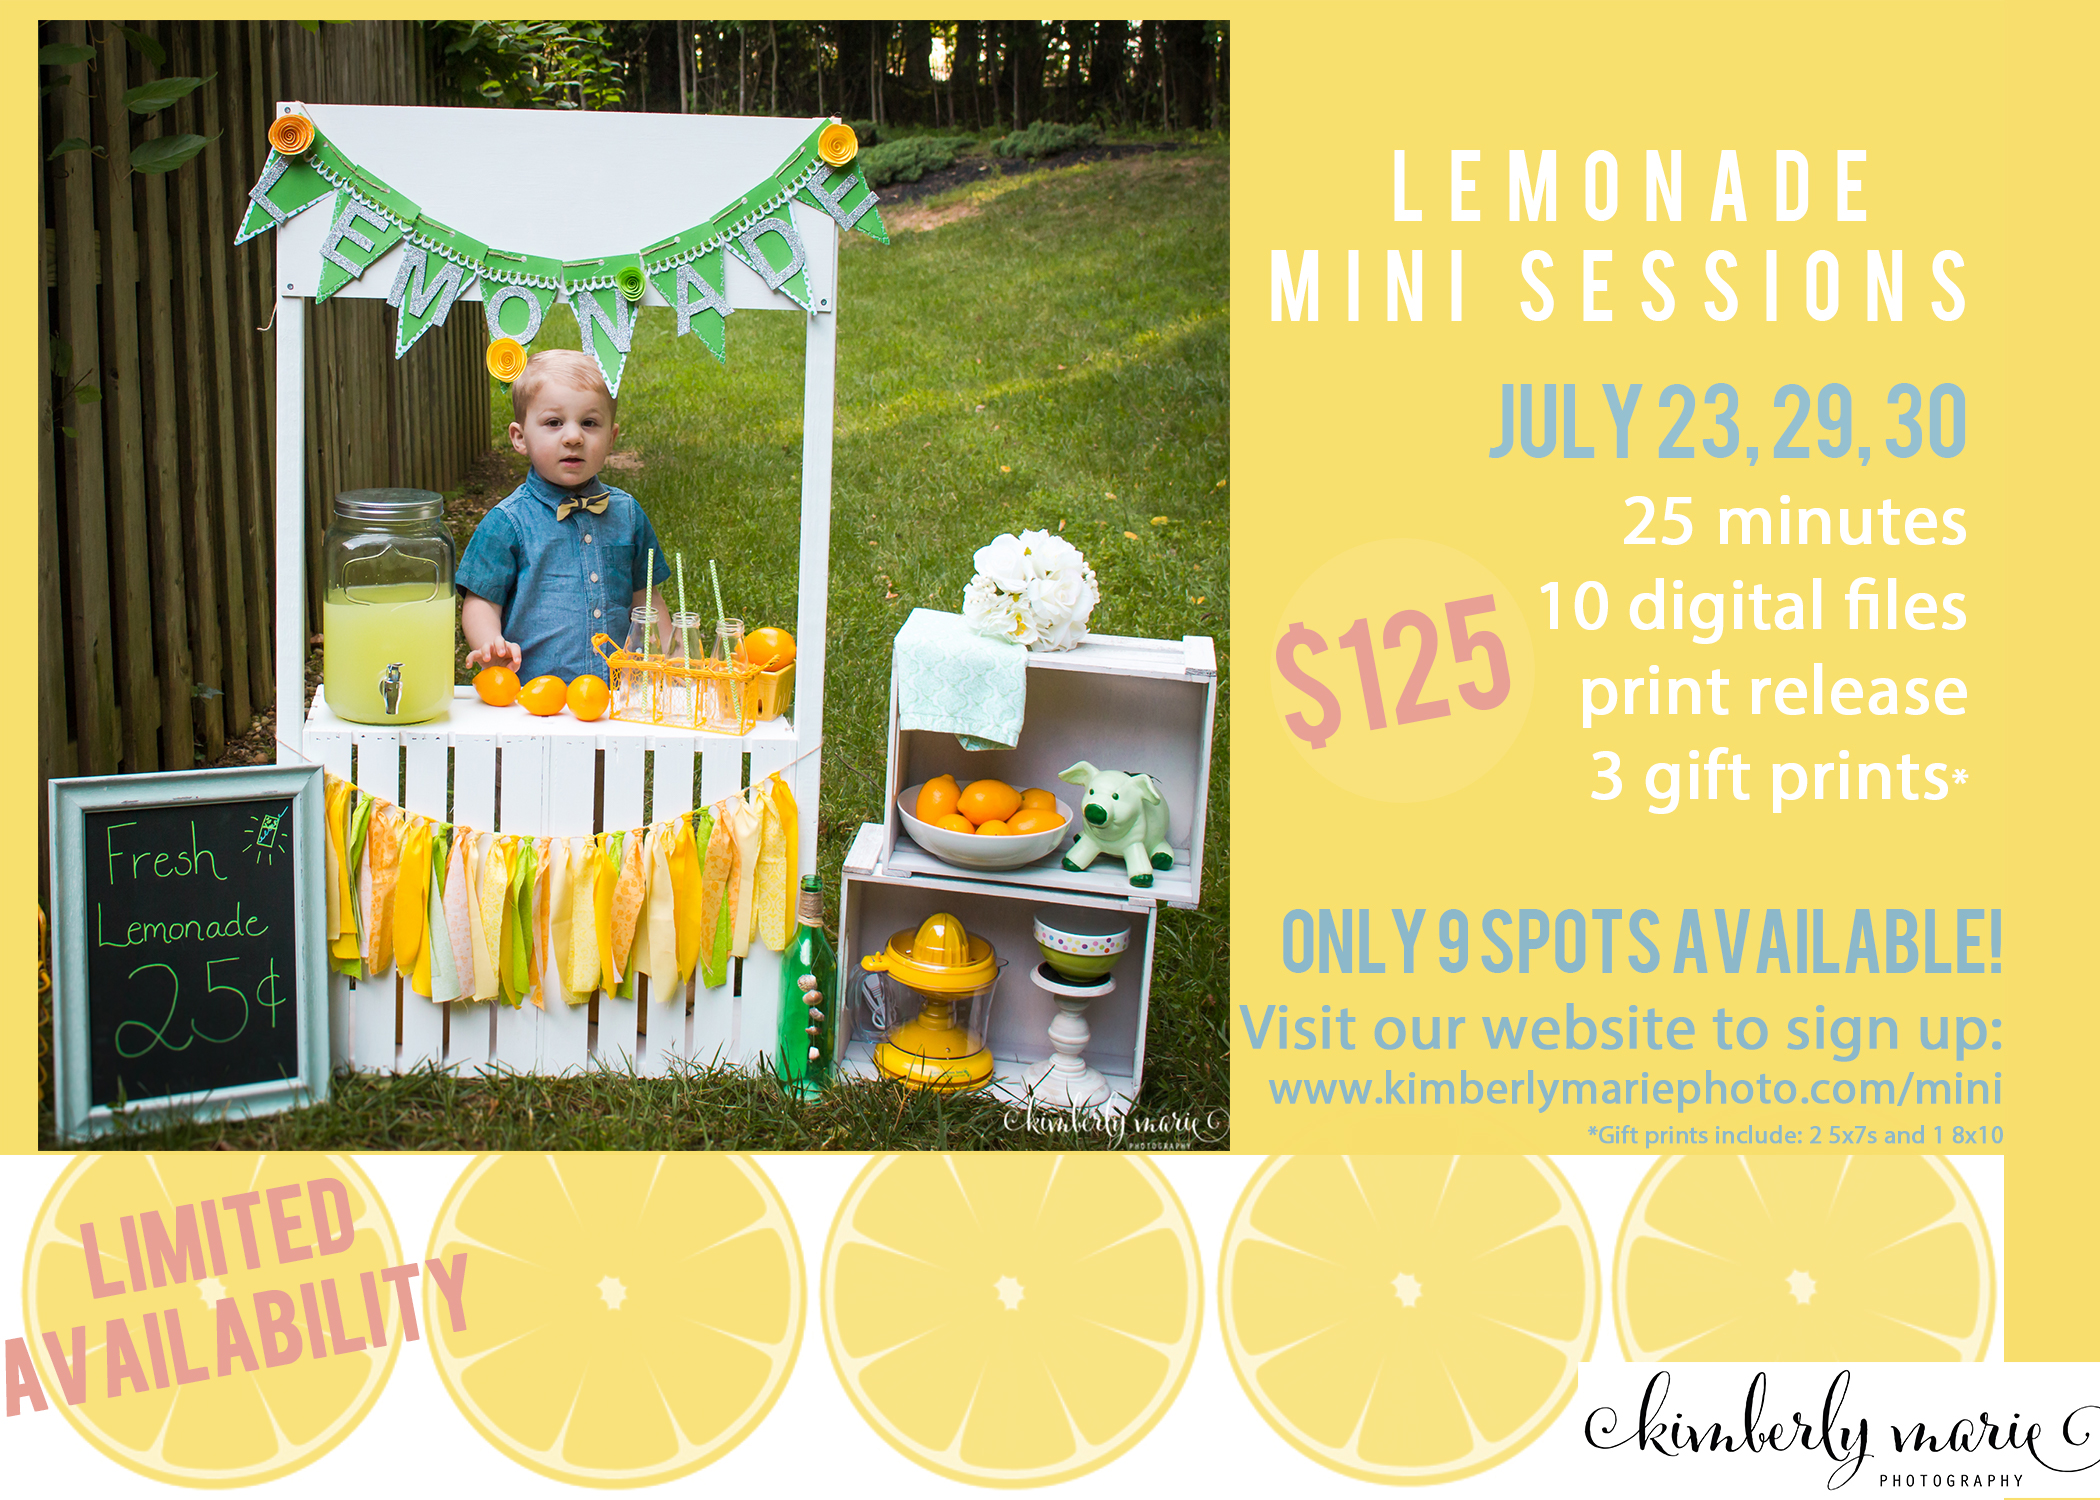 Lemonade Mini Sessions Ad.jpg